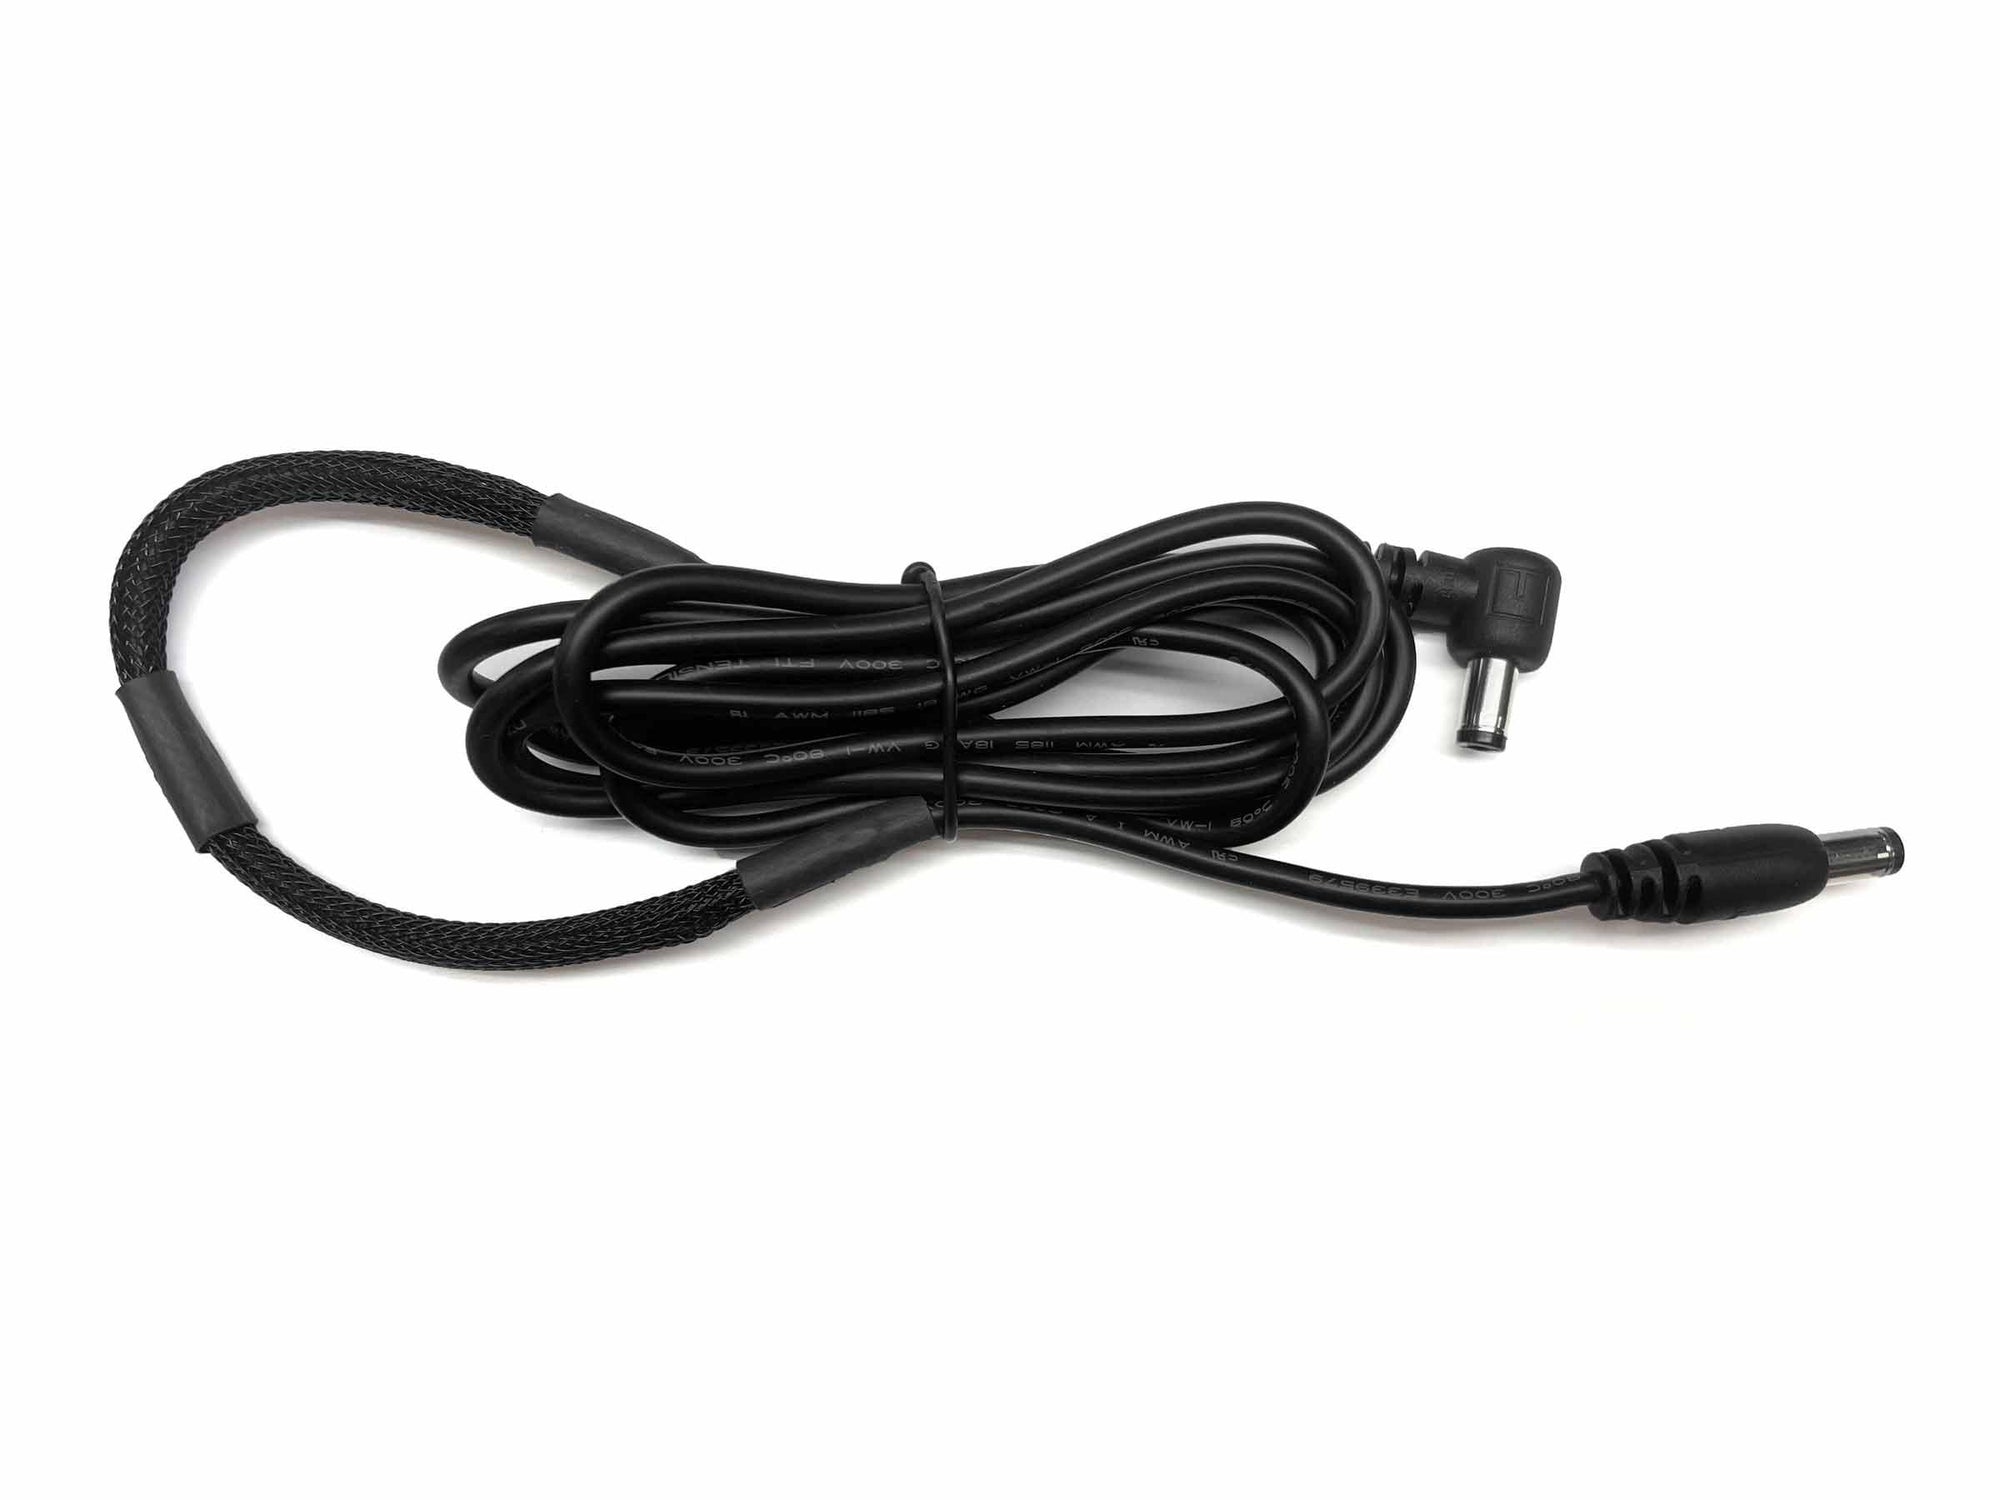 Headset cable for Syris V900L Polarized Headlamp